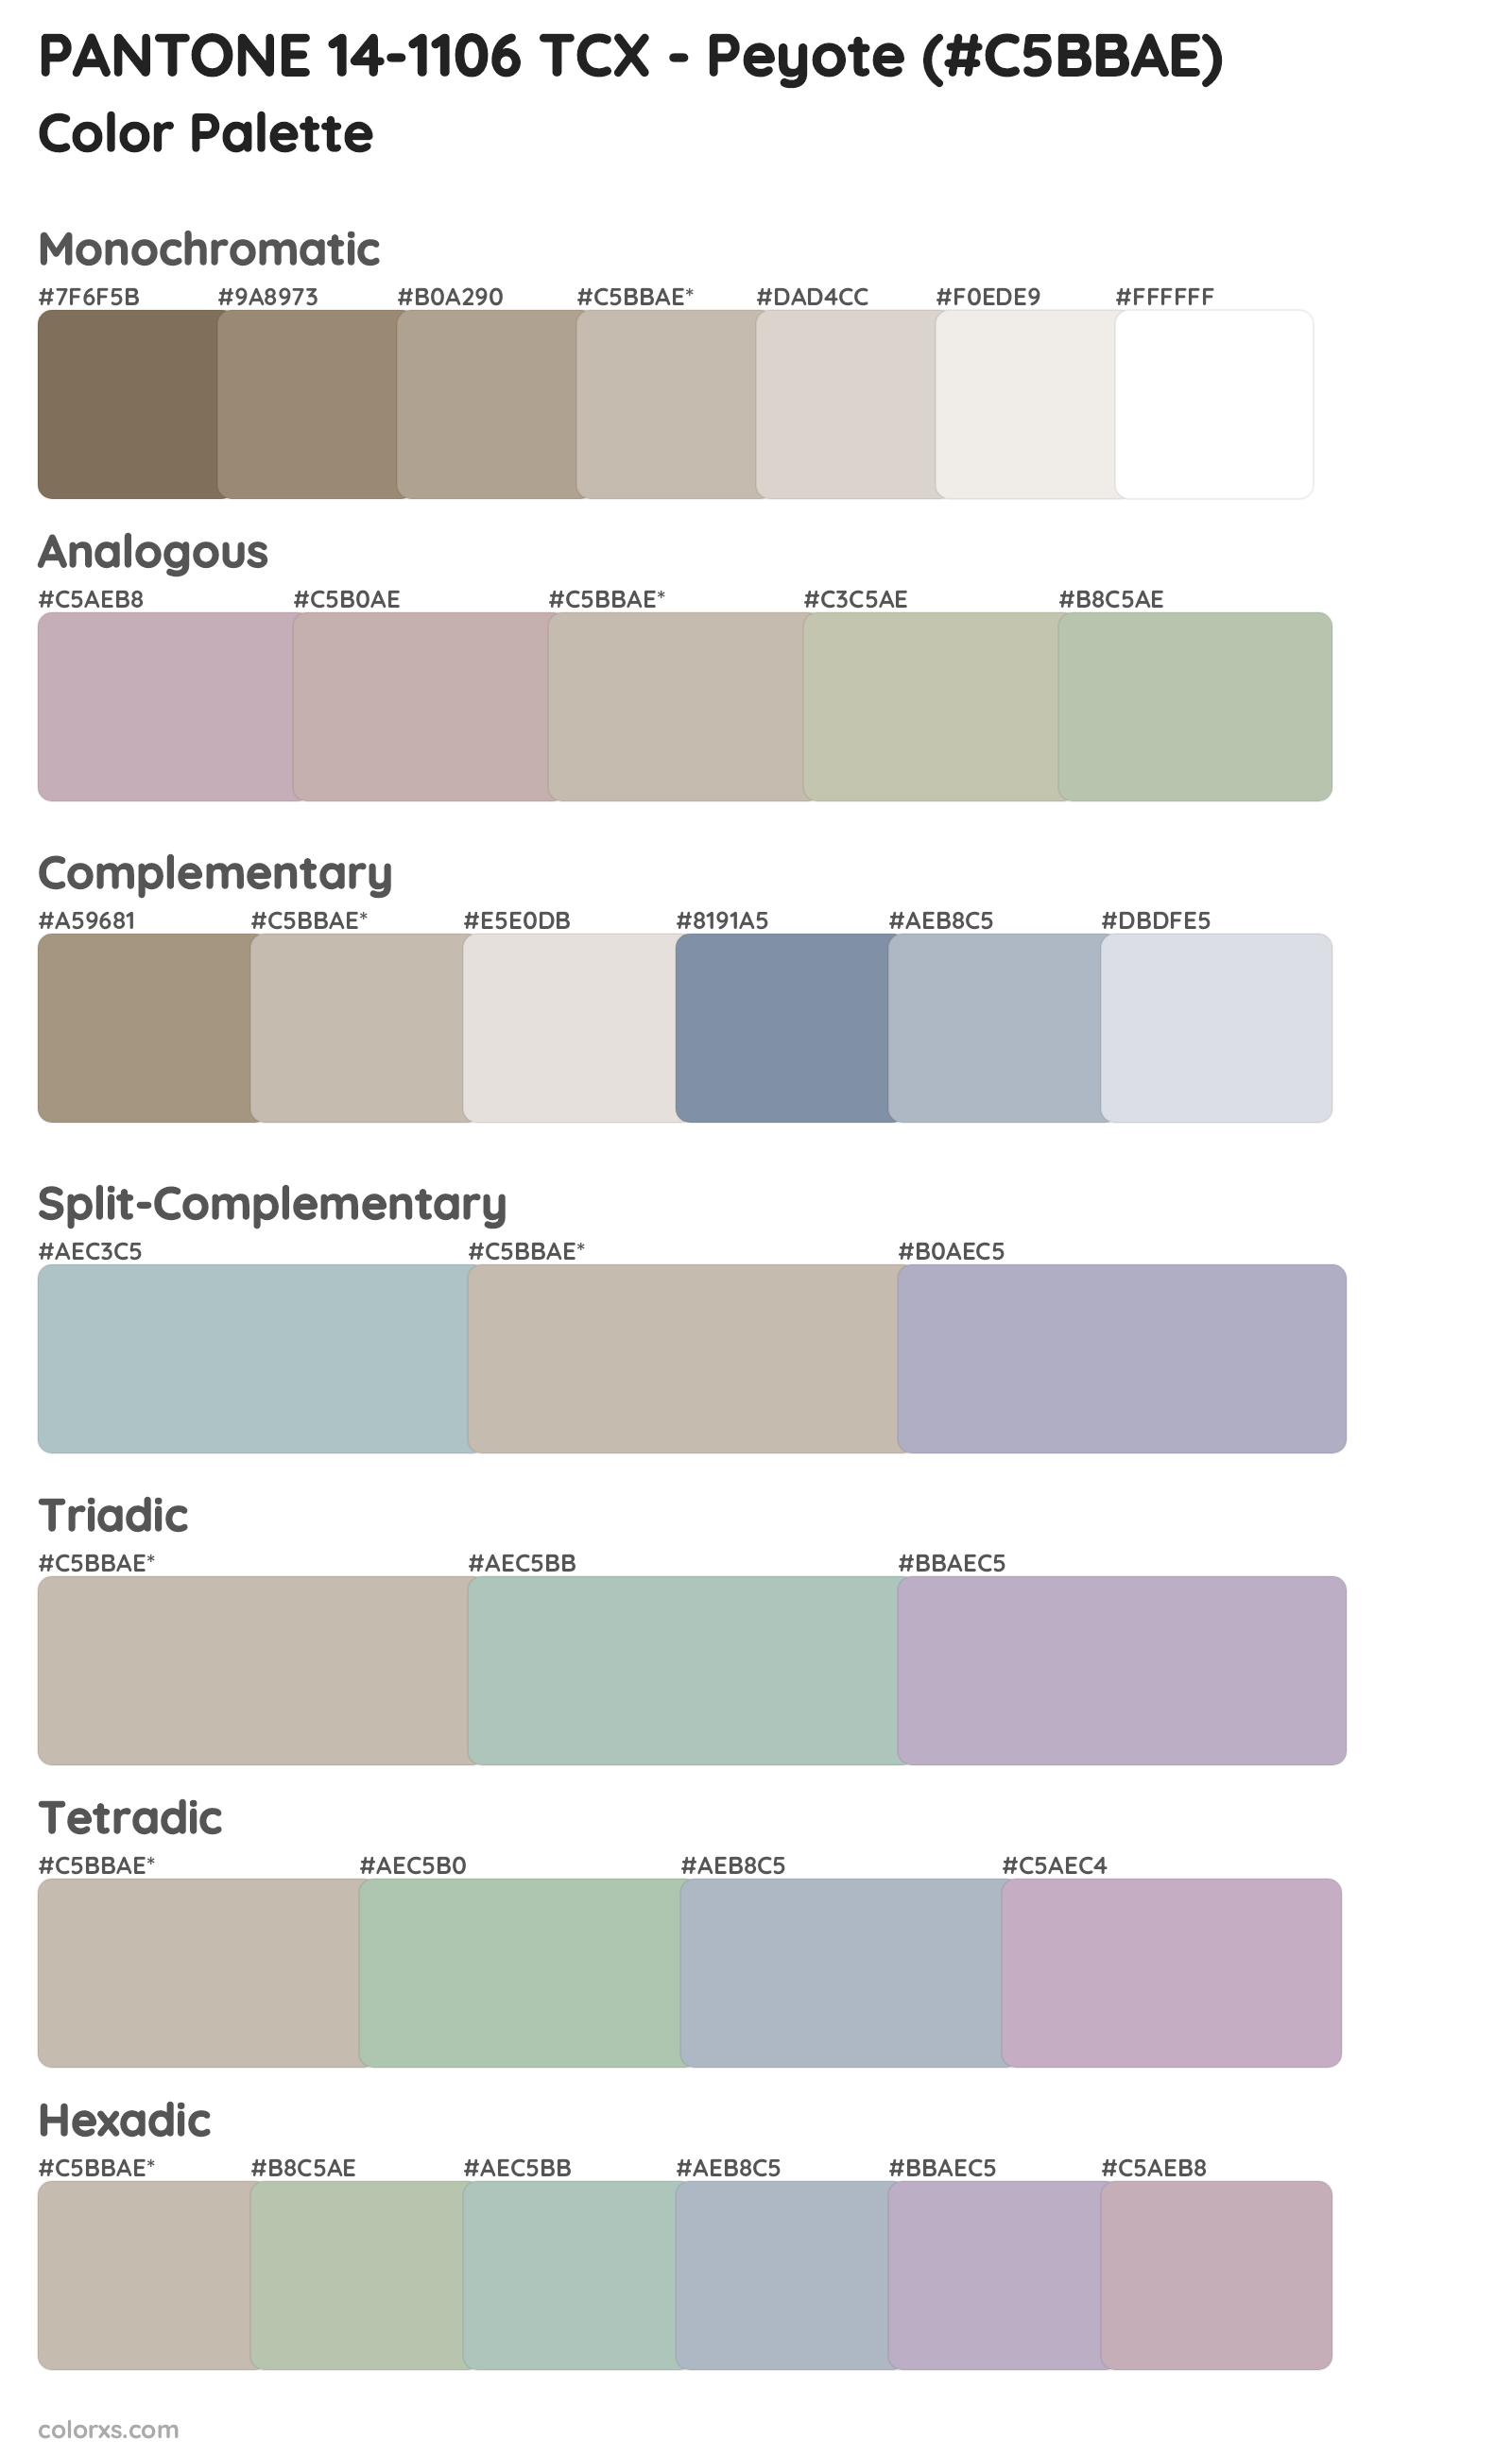 PANTONE 14-1106 TCX - Peyote Color Scheme Palettes